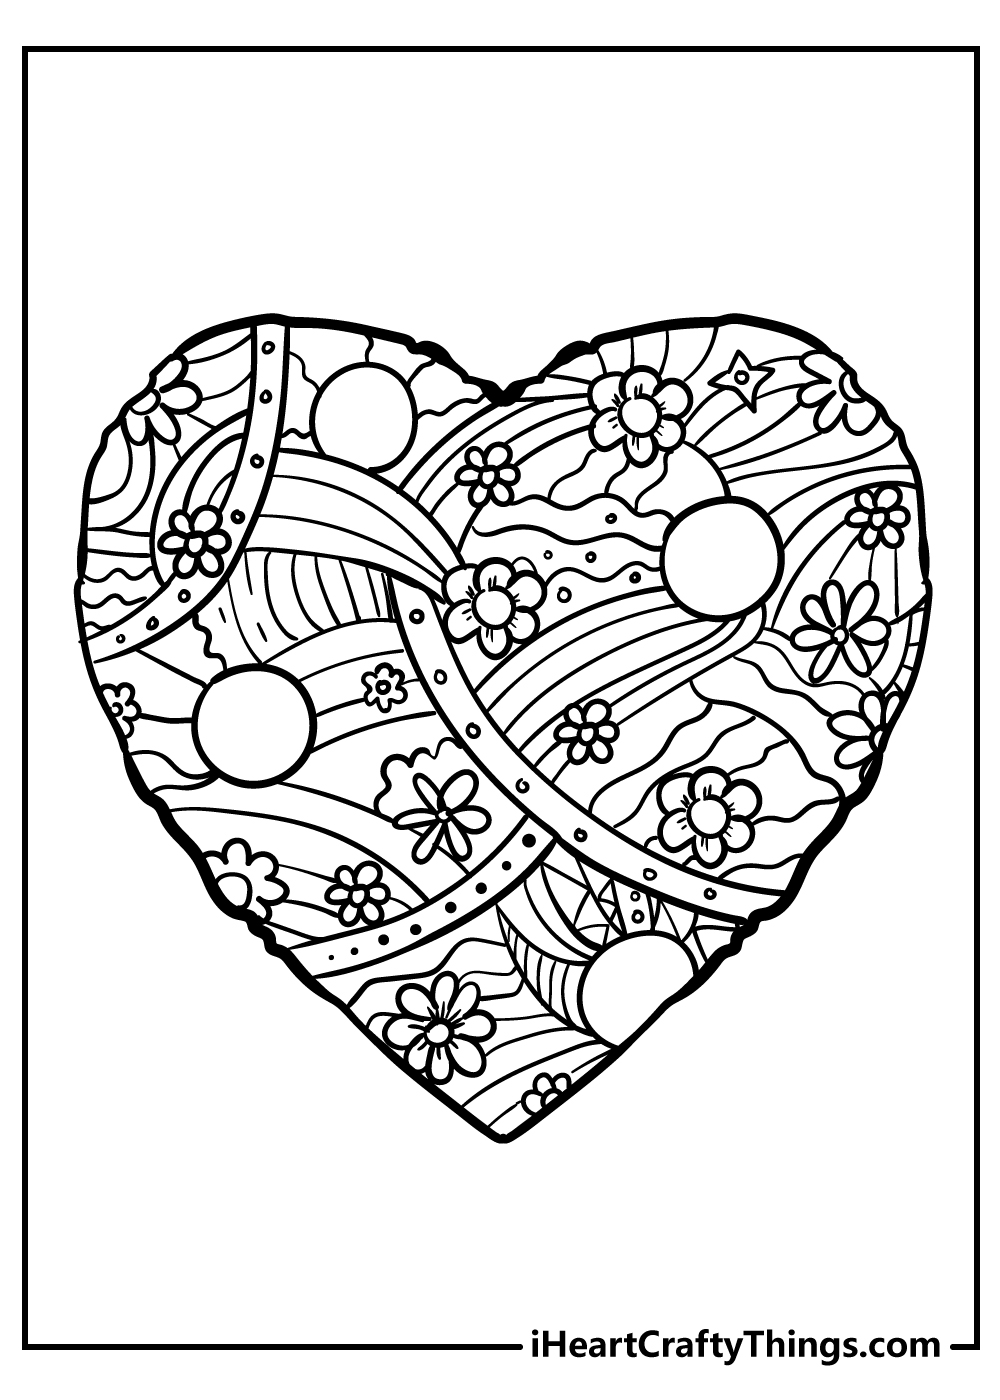  heart coloring original sheet for children free download